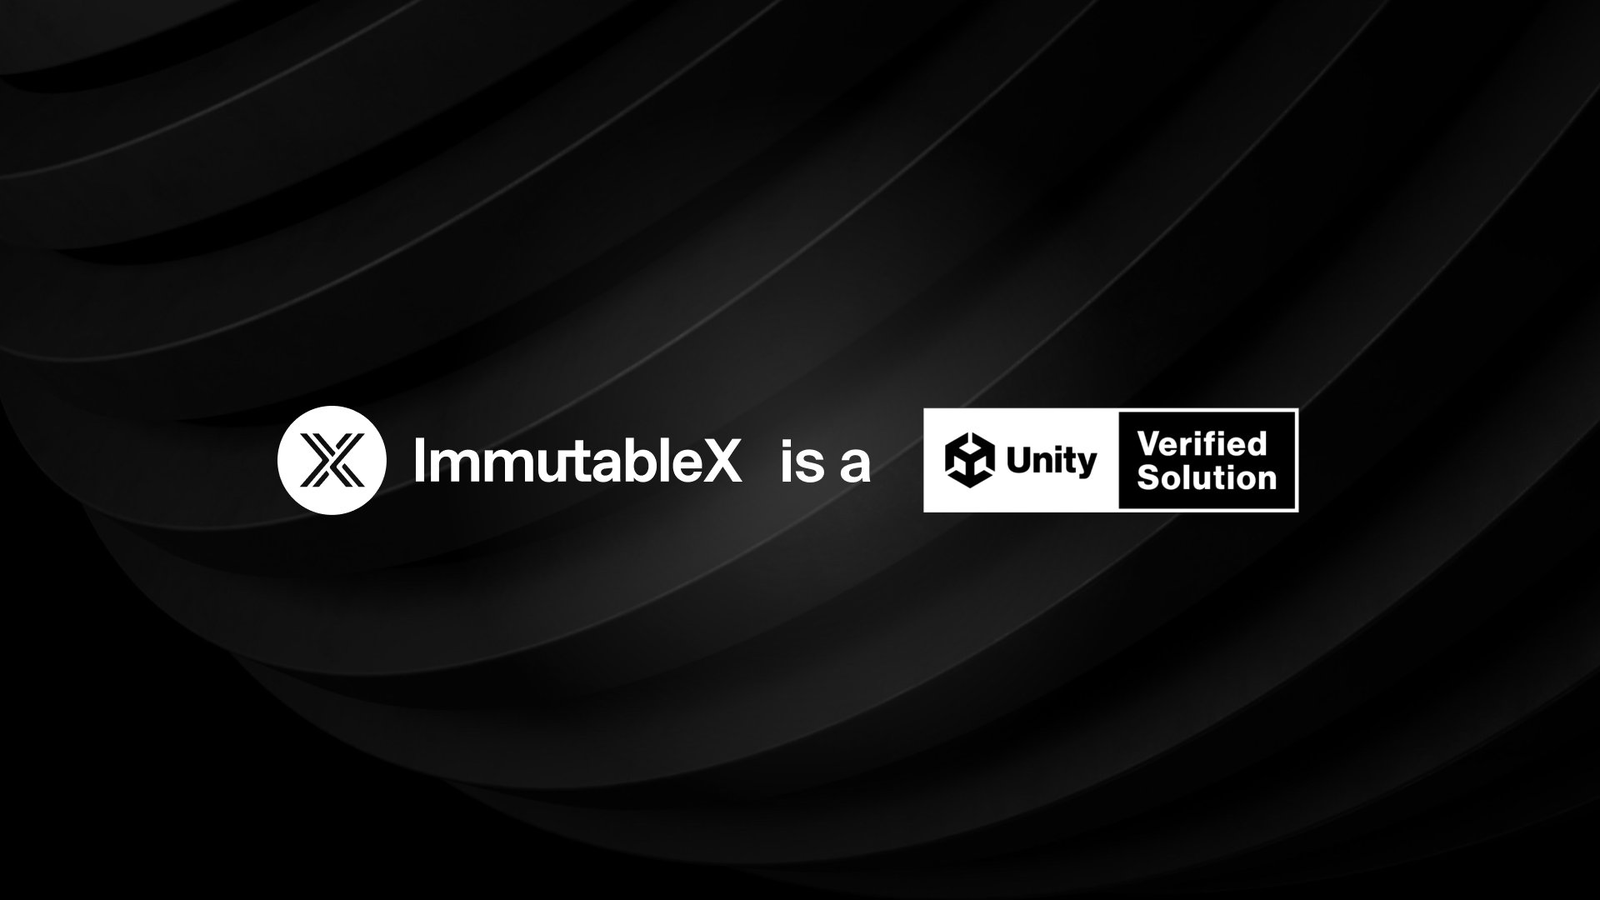 ImmutableX is a Unity verified Solution